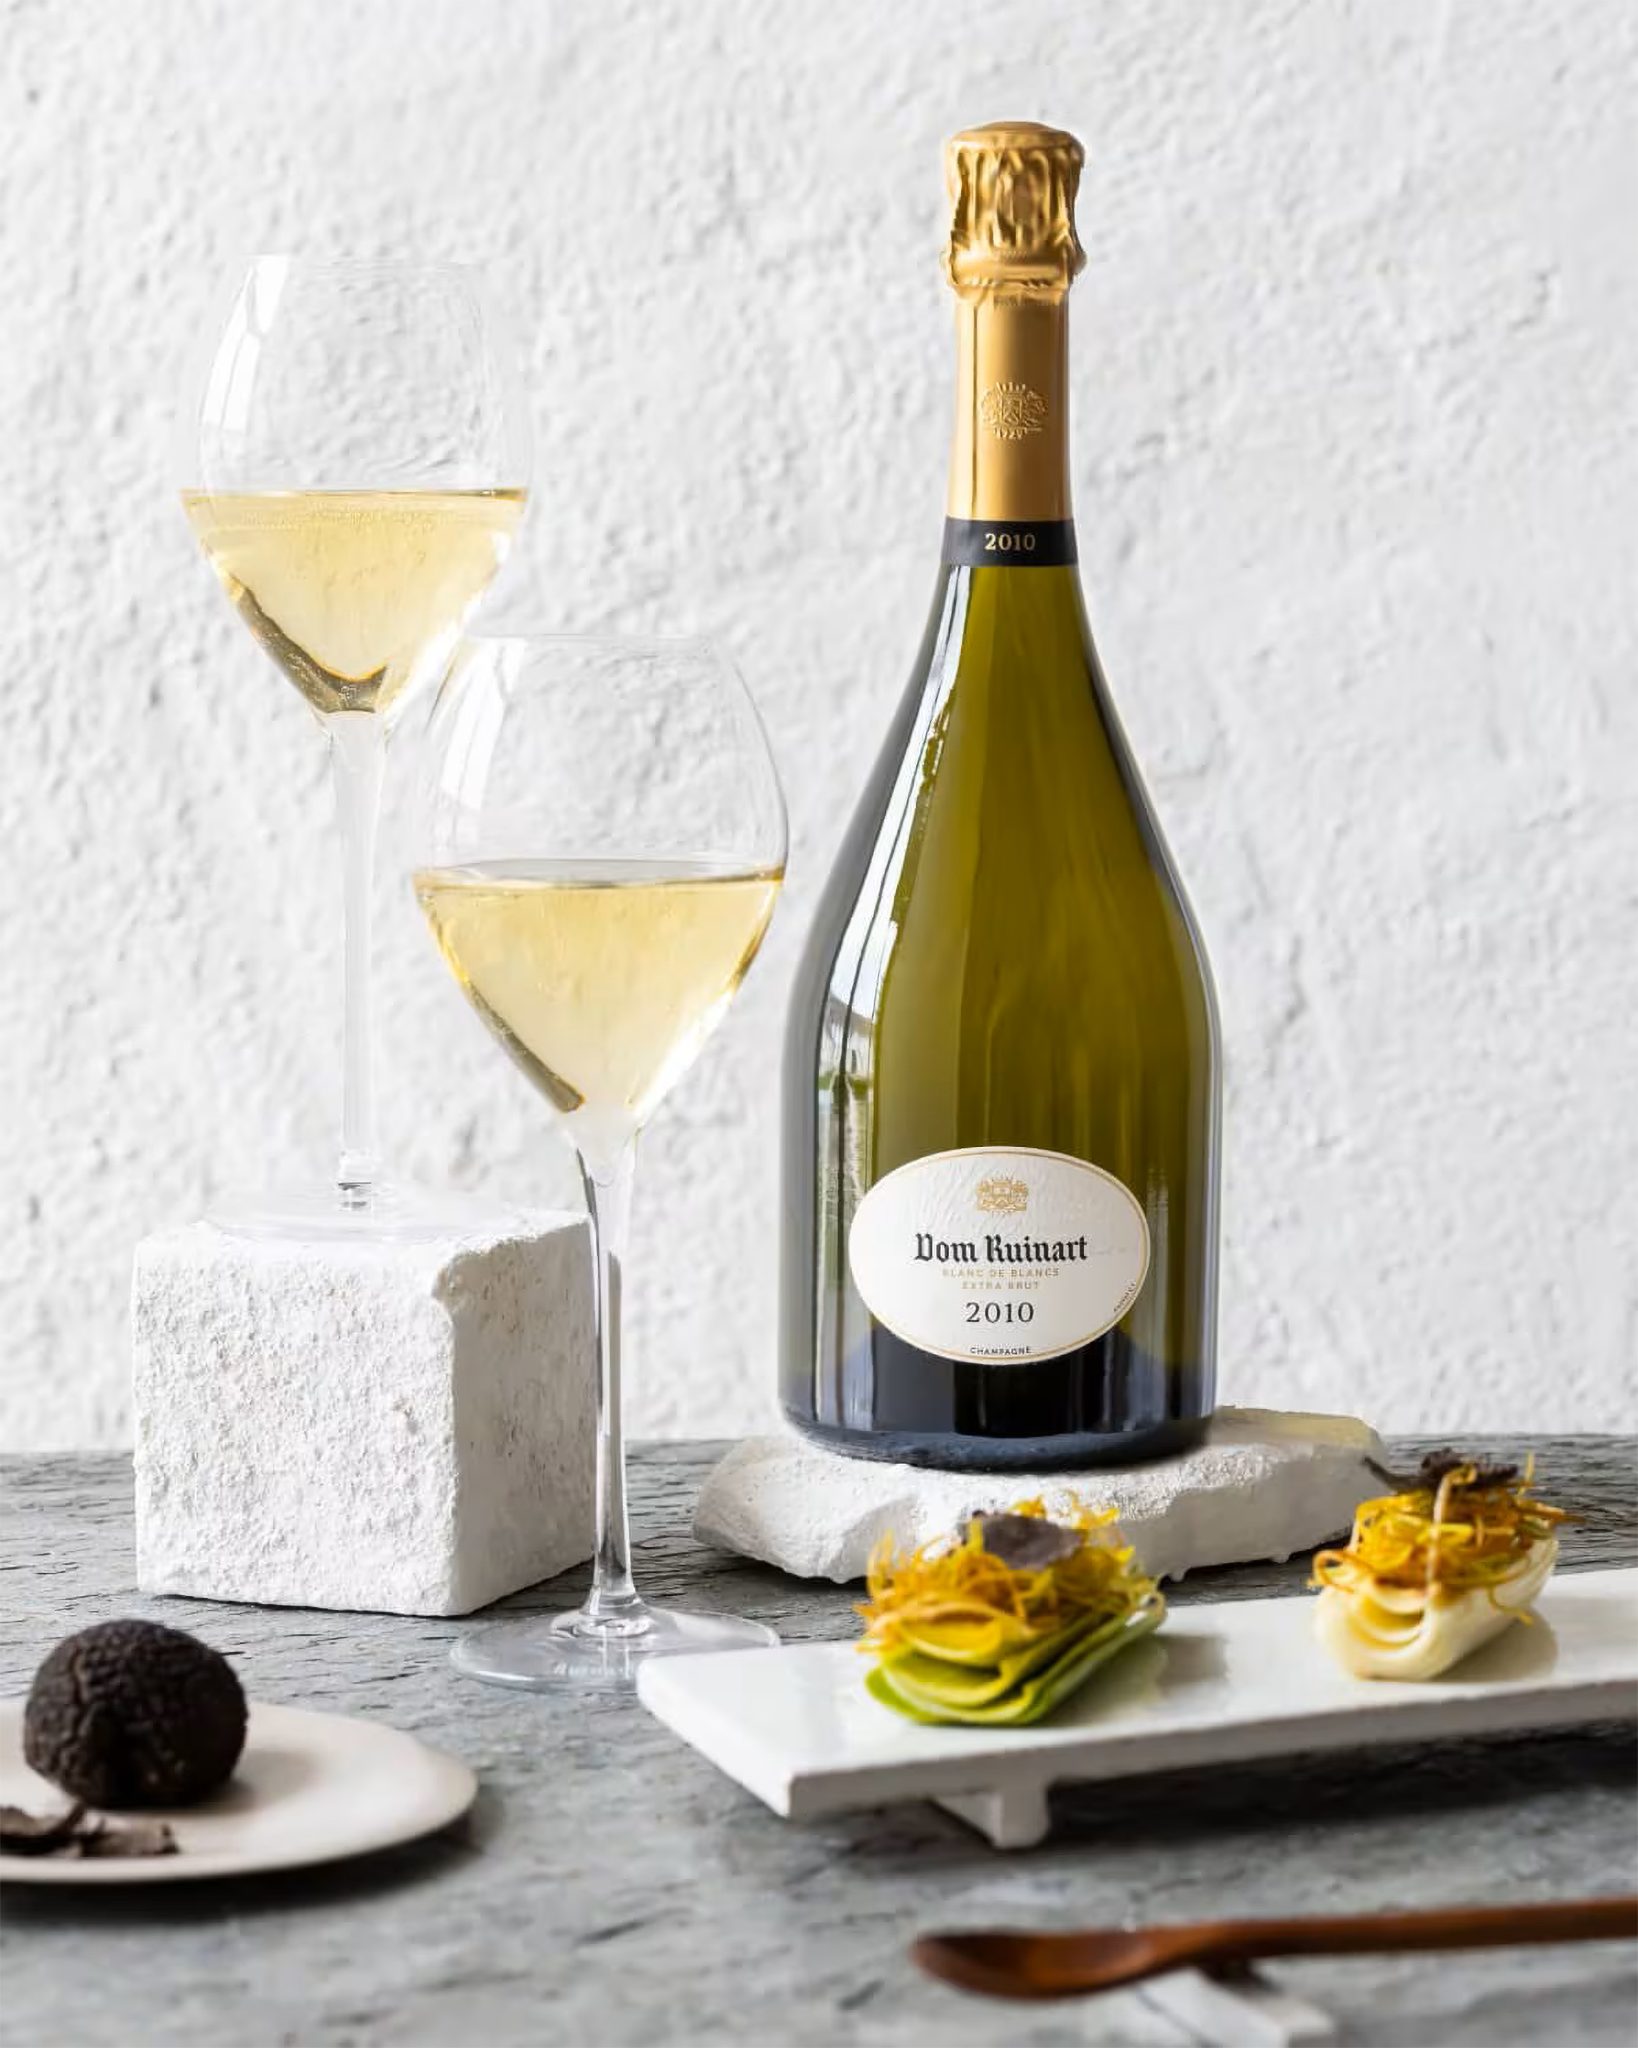 Champagne Ruinart Blanc de Blancs - Achat champagnes Nicolas